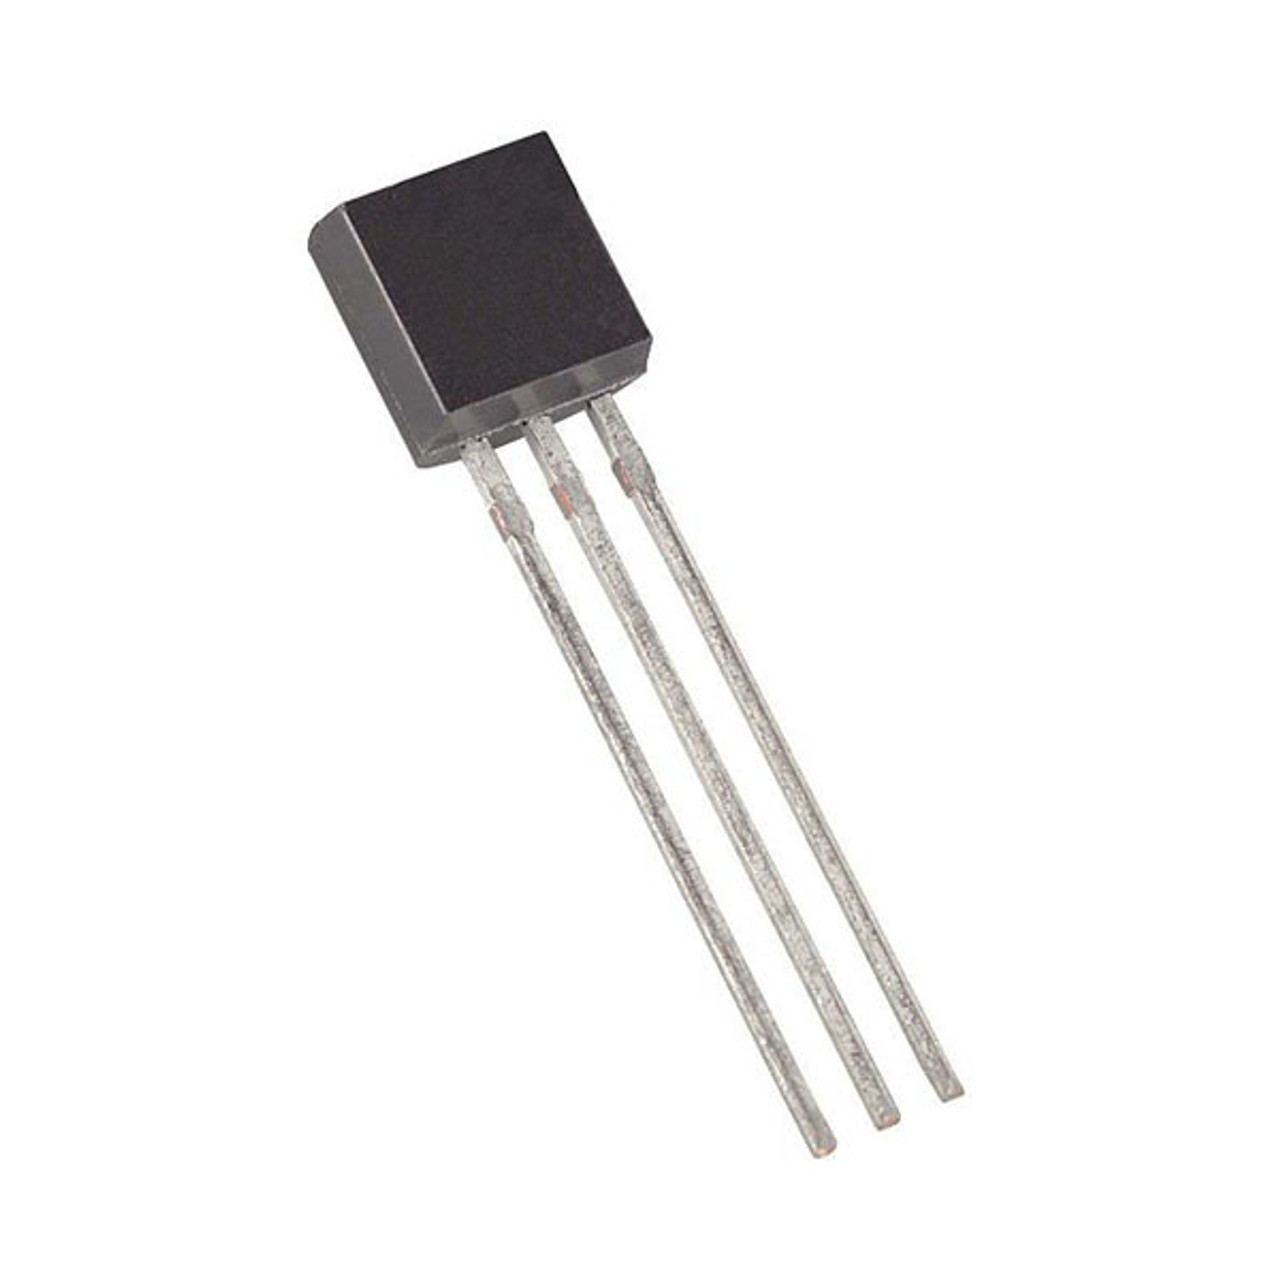 Waterproof DS18B20-Compatible Temperature Sensor with Resistor